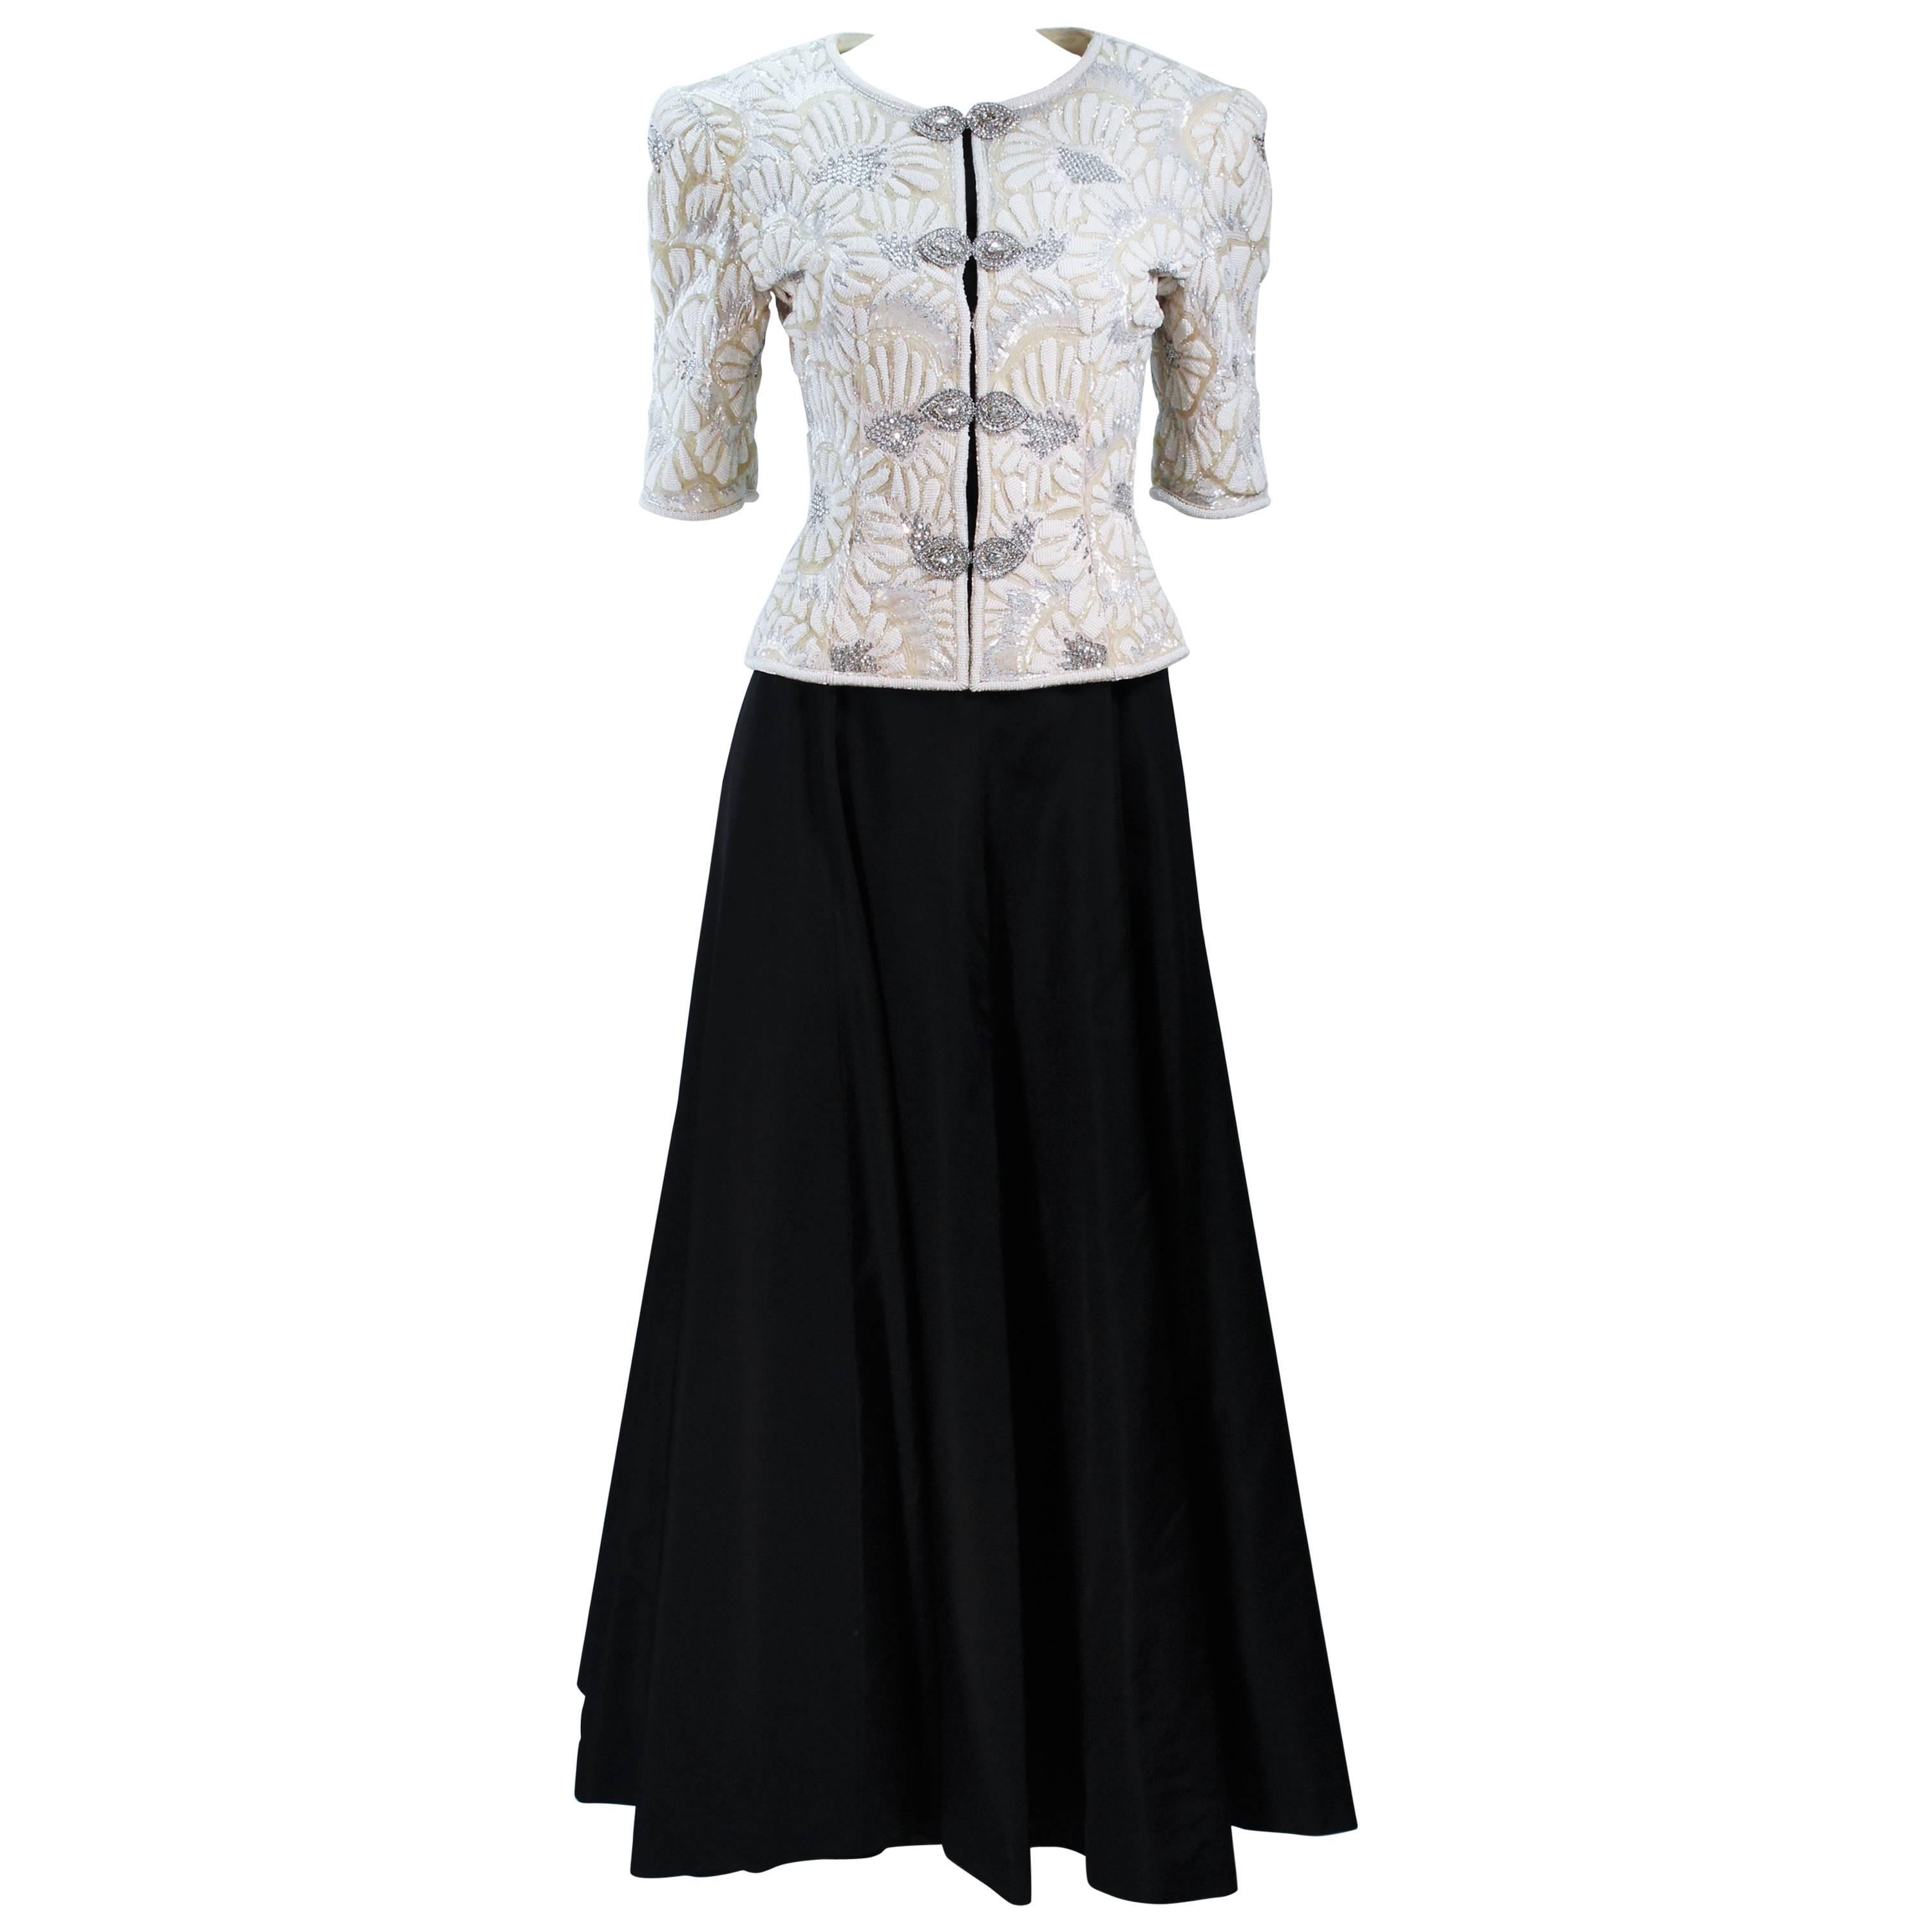 OSCAR DE LA RENTA Black Satin Gown and Embellished Jacket Ensemble Size 8